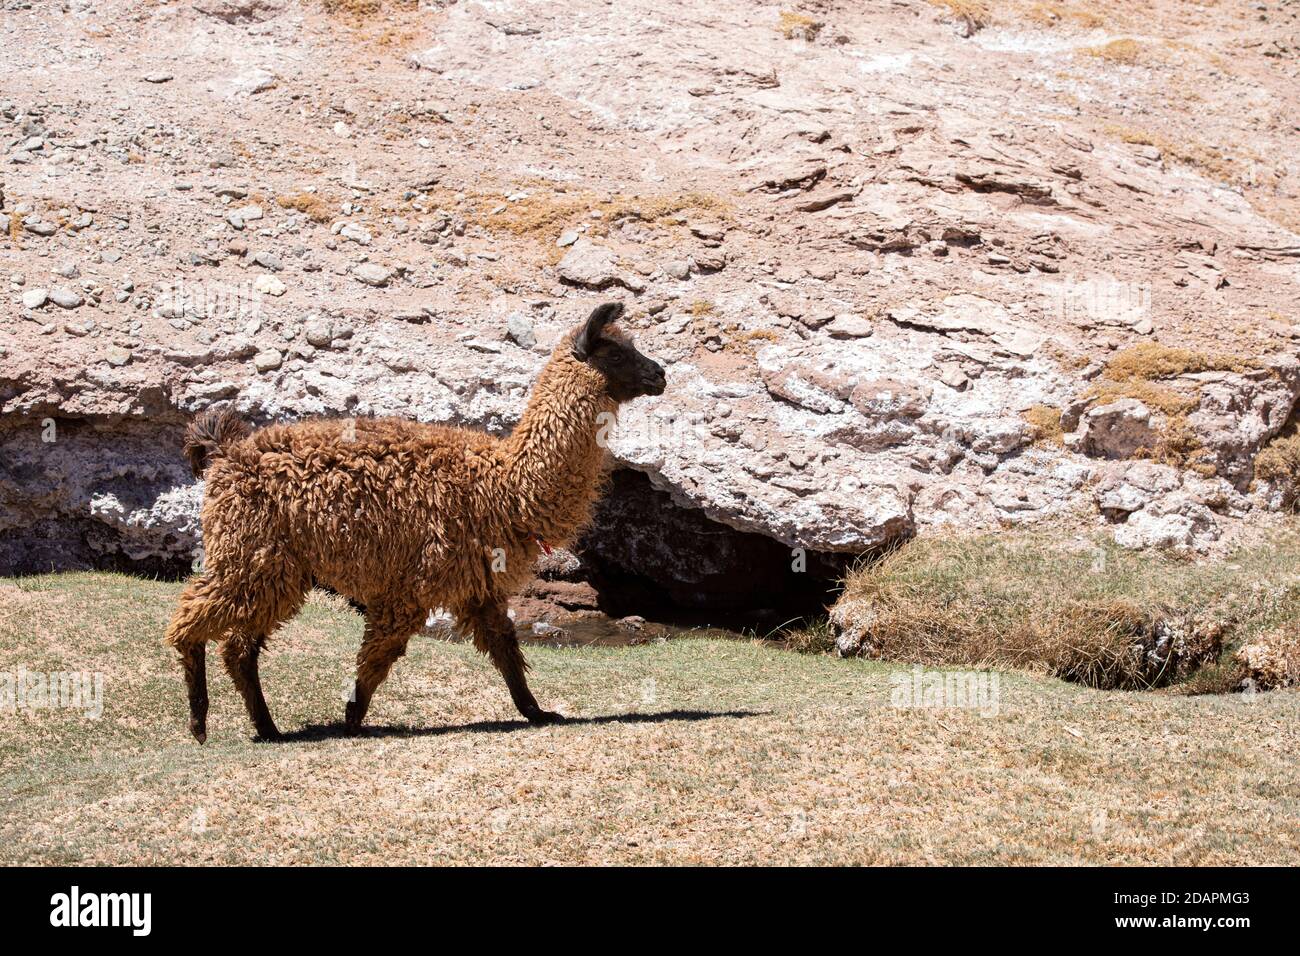 Llama, Lama glama, près de la route 33, Piedra del Molino, Parc national de Los Cardones, province de Salta, Argentine. Banque D'Images